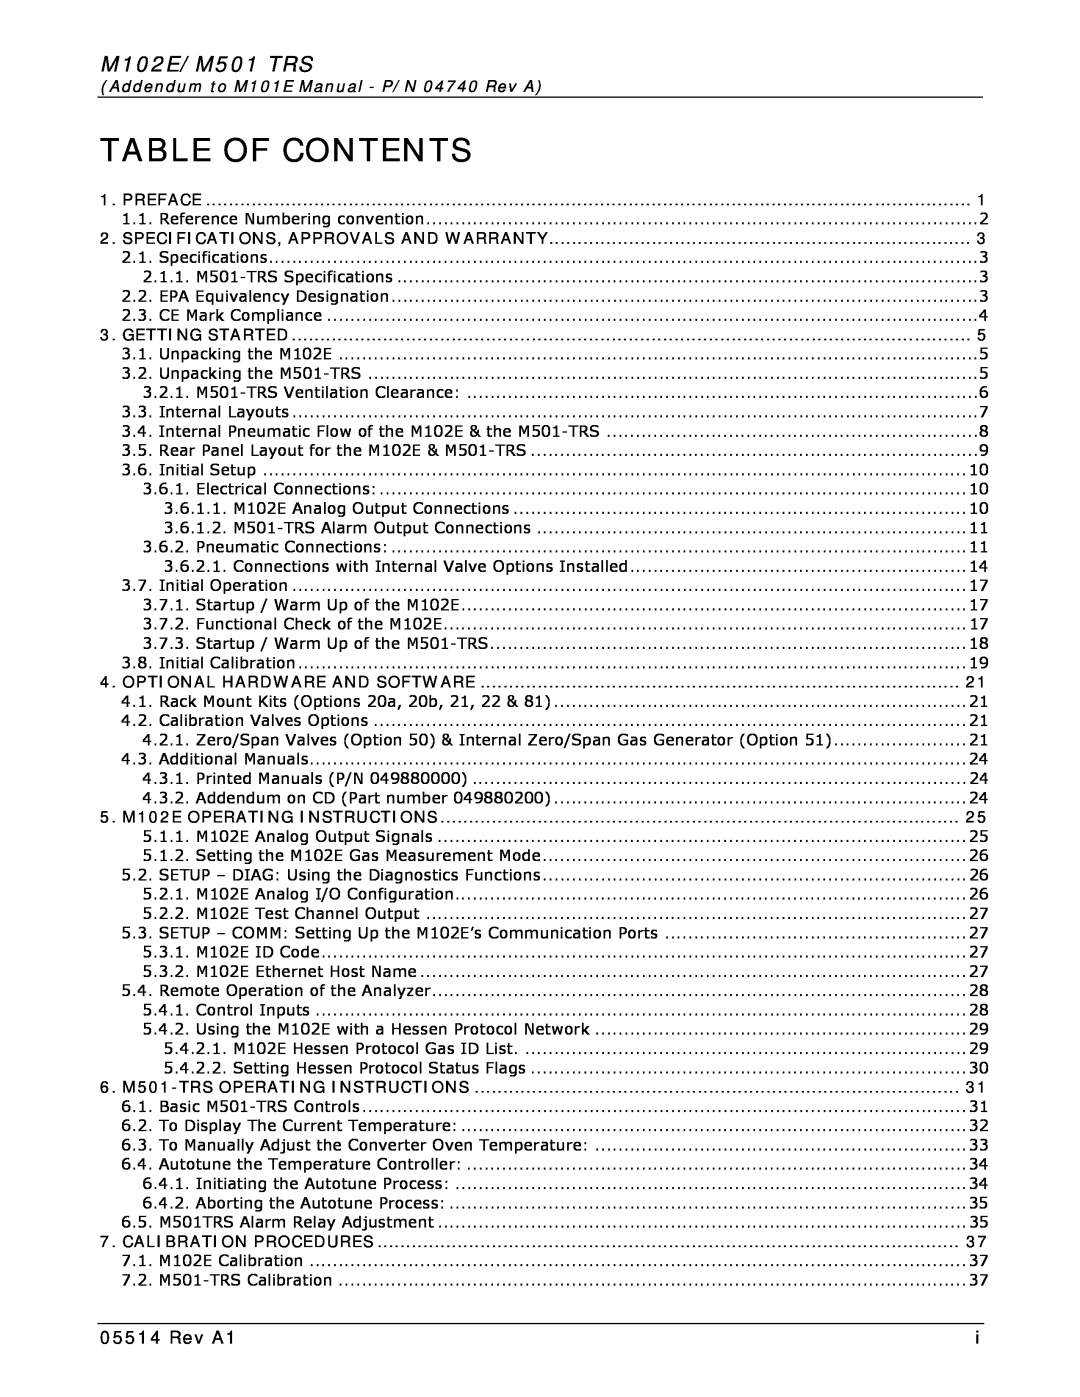 Teledyne manual Table Of Contents, M102E/M501 TRS, Rev A1, Addendum to M101E Manual - P/N 04740 Rev A 